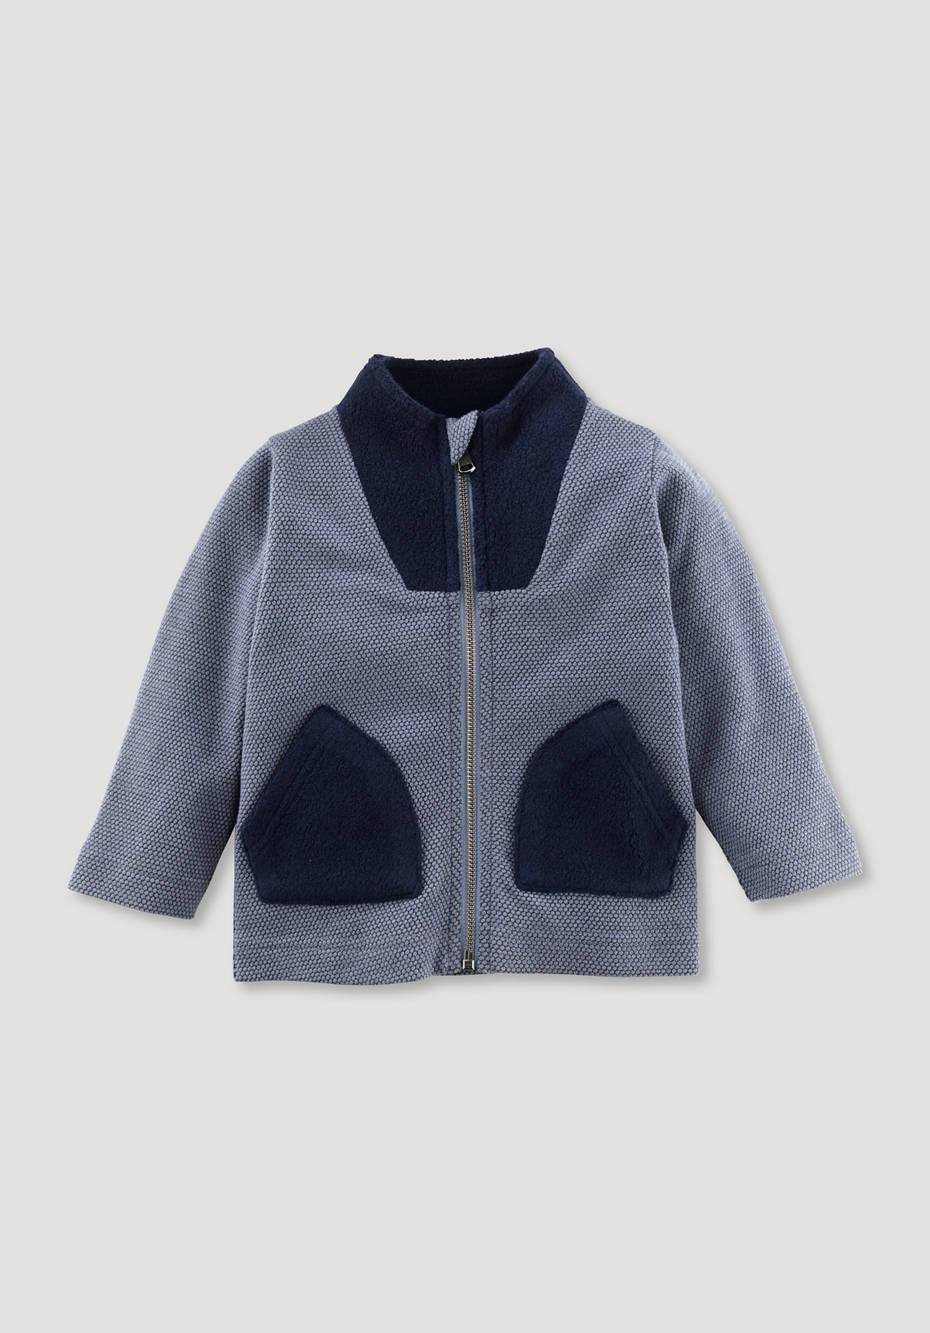 Jacket made of organic merino wool with organic cotton